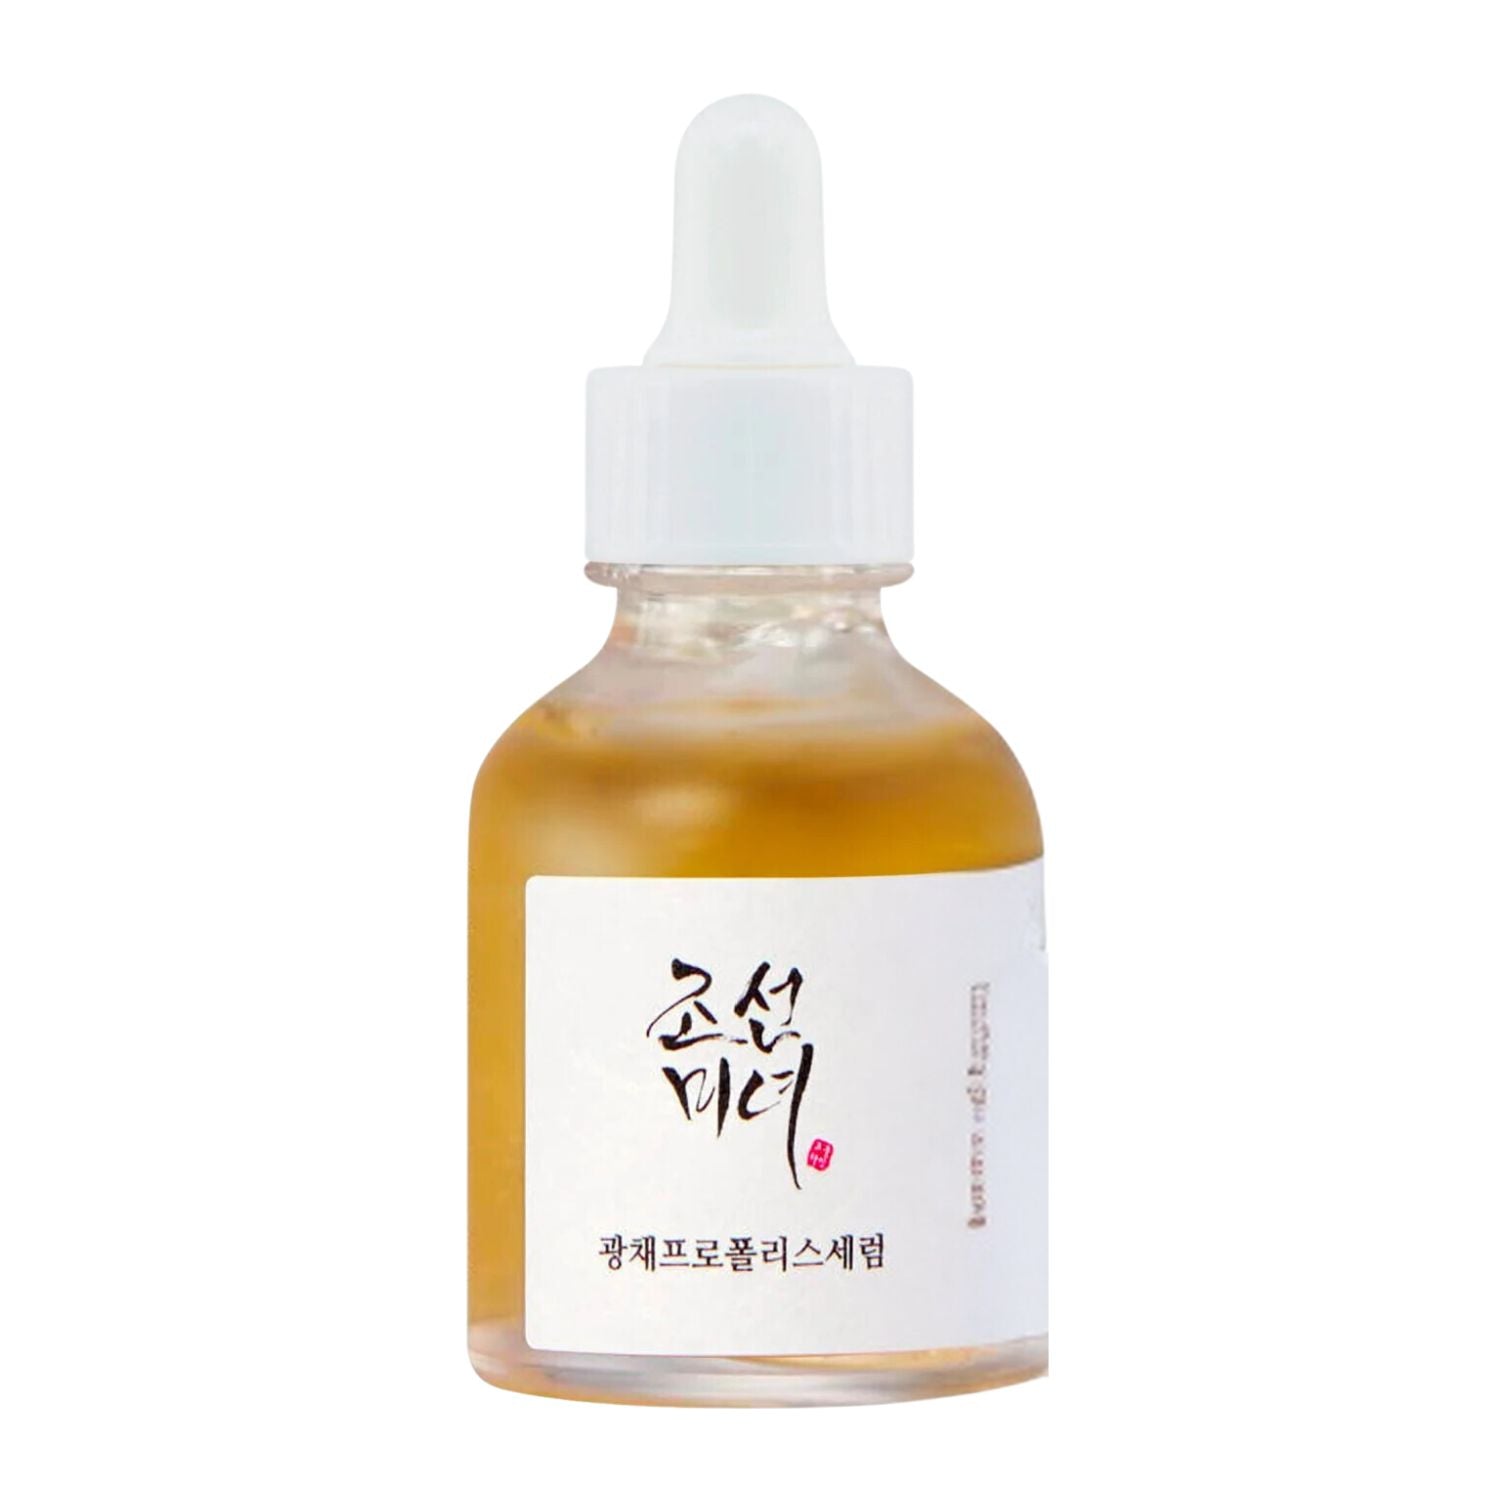 Beauty of Joseon Beauty of Joseon | Glow Serum Propolis + Niacinamide 30ml - SkinShop